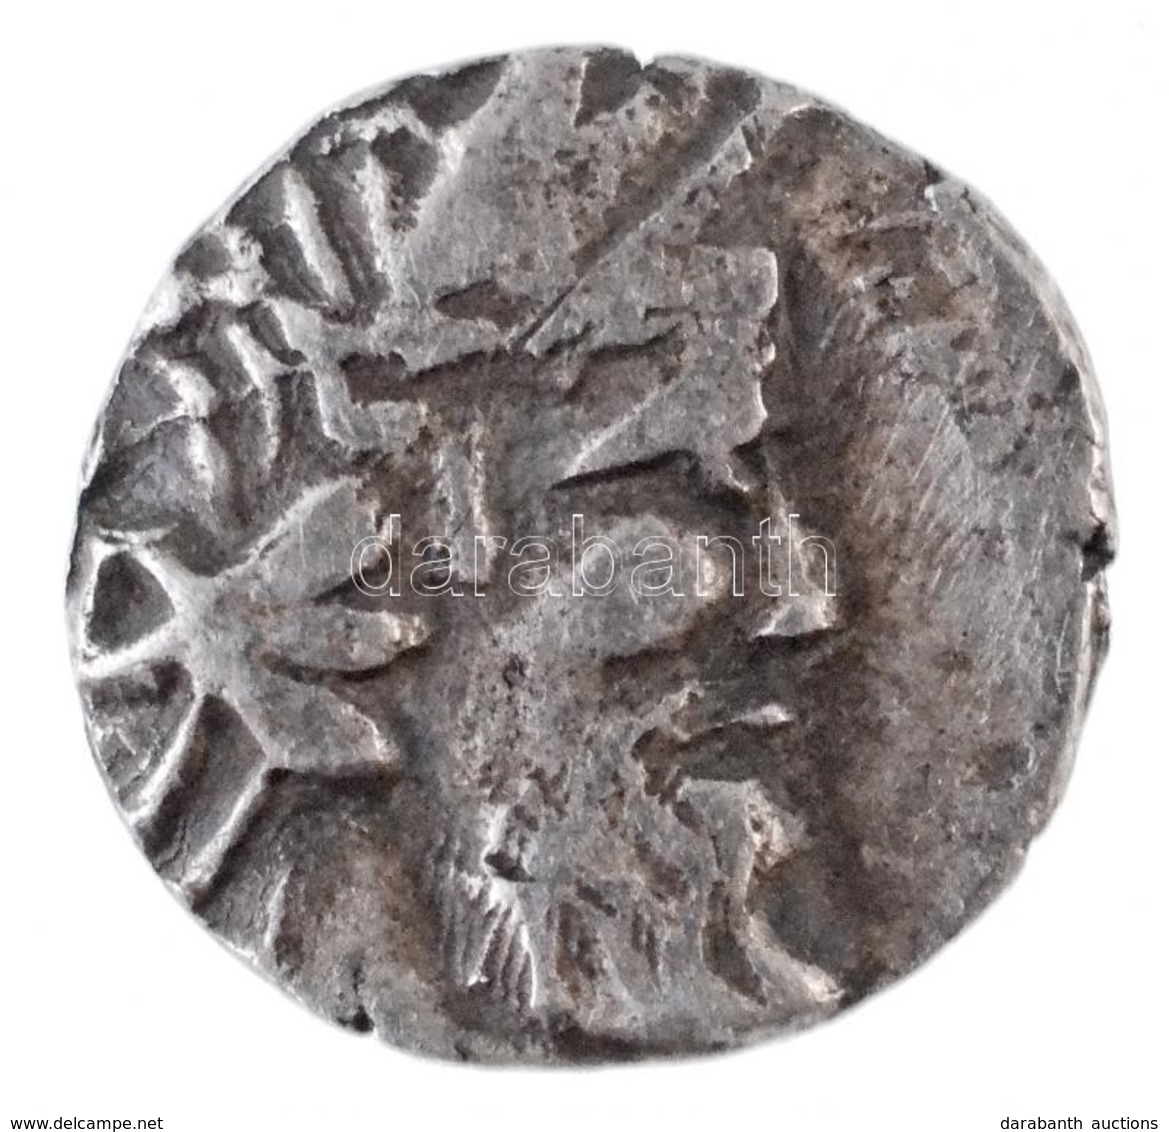 Azonosítatlan ókori Ezüstérme (1,87g) T:2-
Unidentified Ancient Silver Coin 'Bearded Head Right / Horseman With Lance' ( - Sin Clasificación